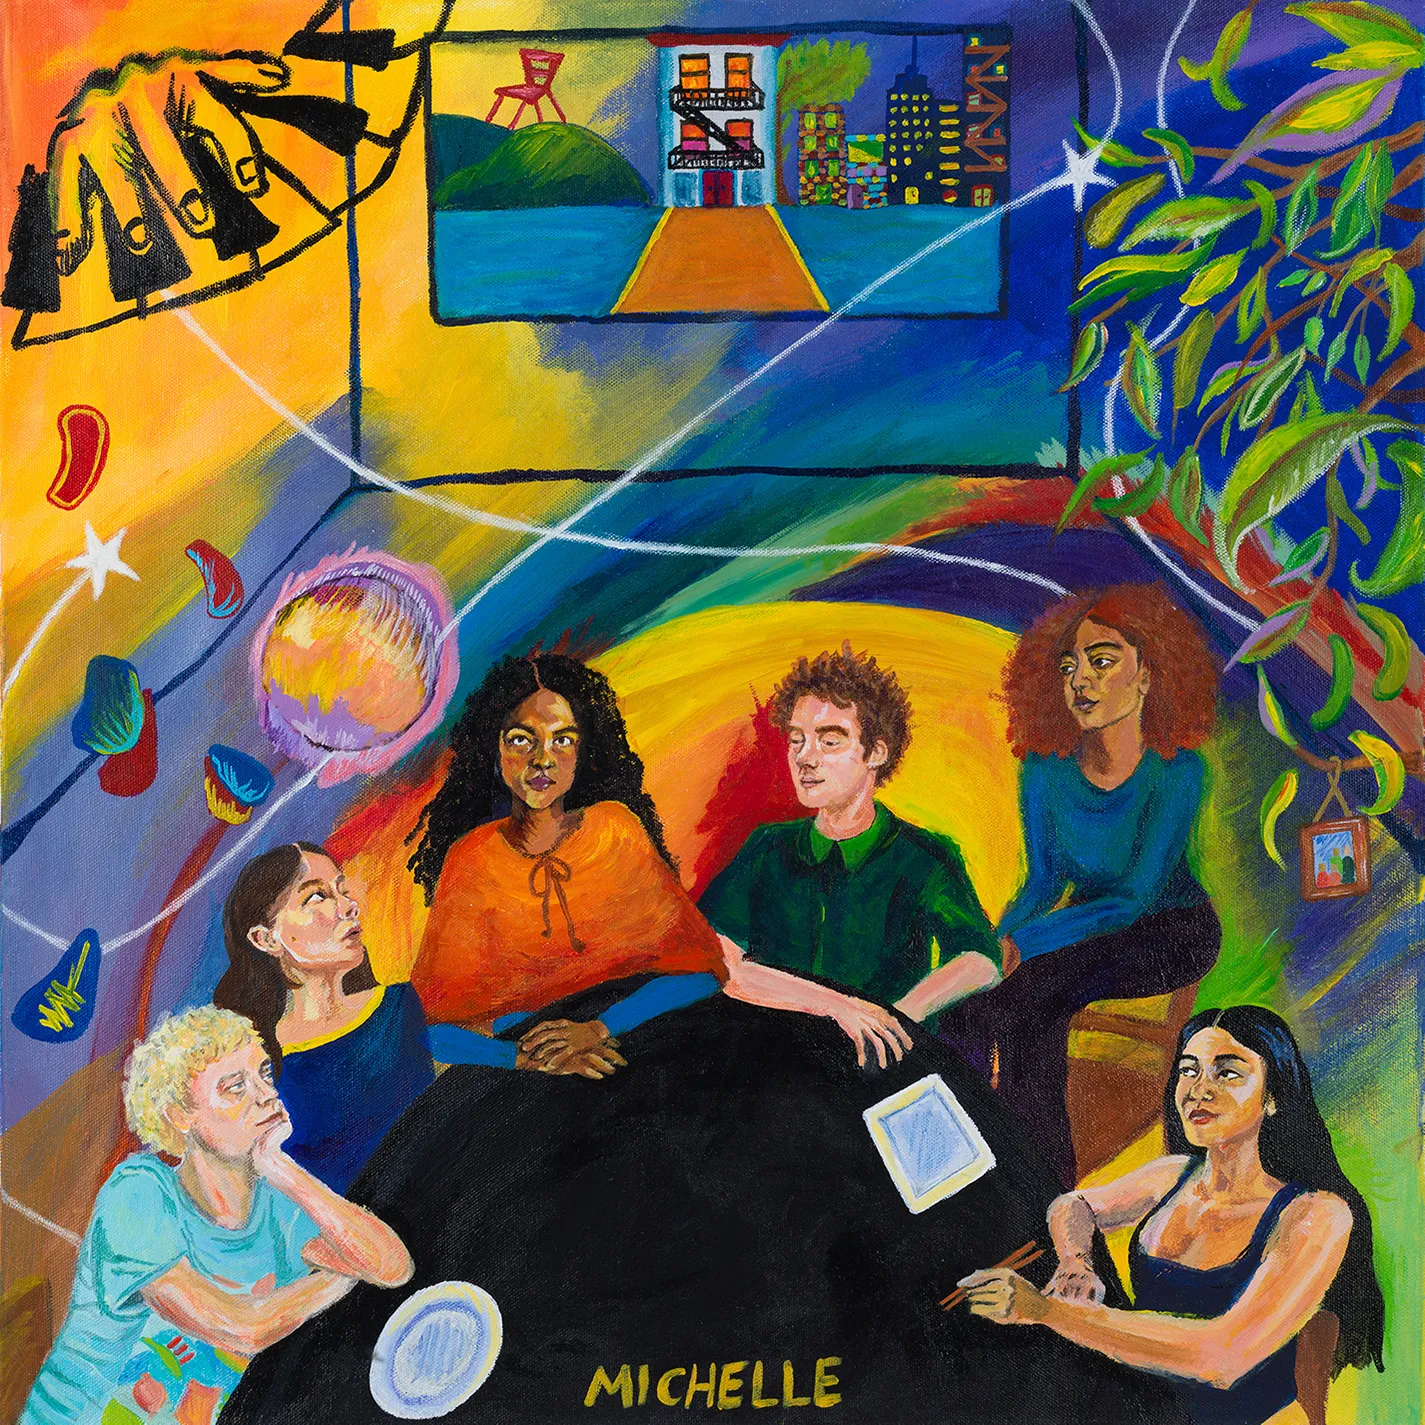 Michelle - After Dinner We Talk Dreams artwork